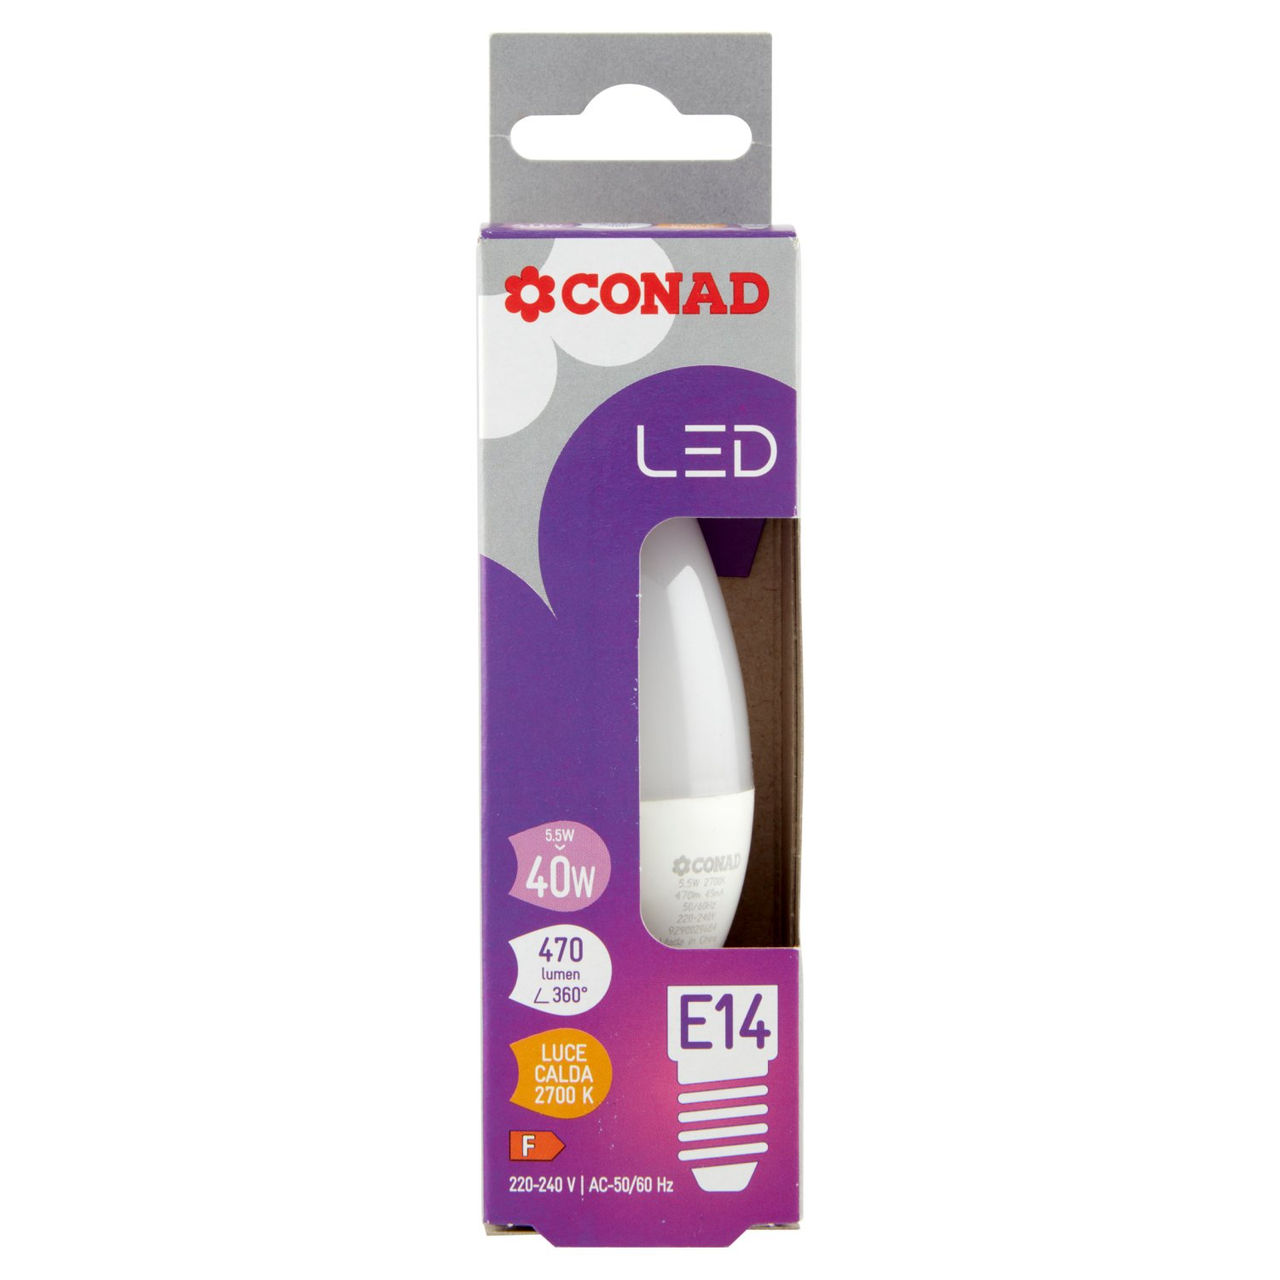 CONAD Led 5.5W 470 Lumen E14 Luce Calda